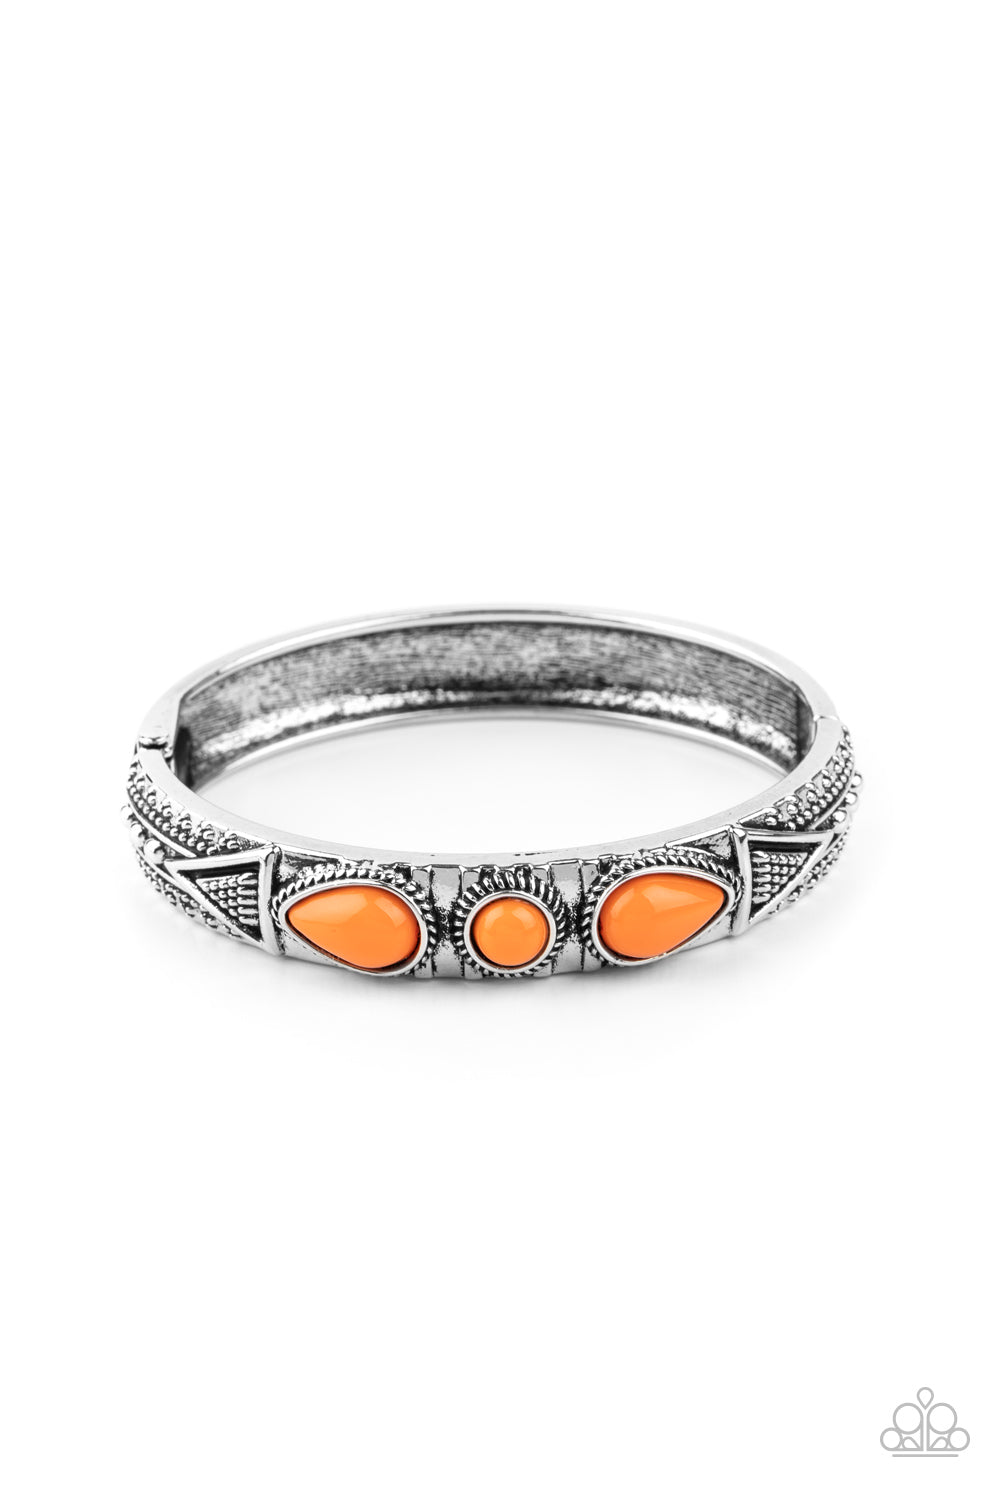 Radiant Ruins - Orange Bracelet